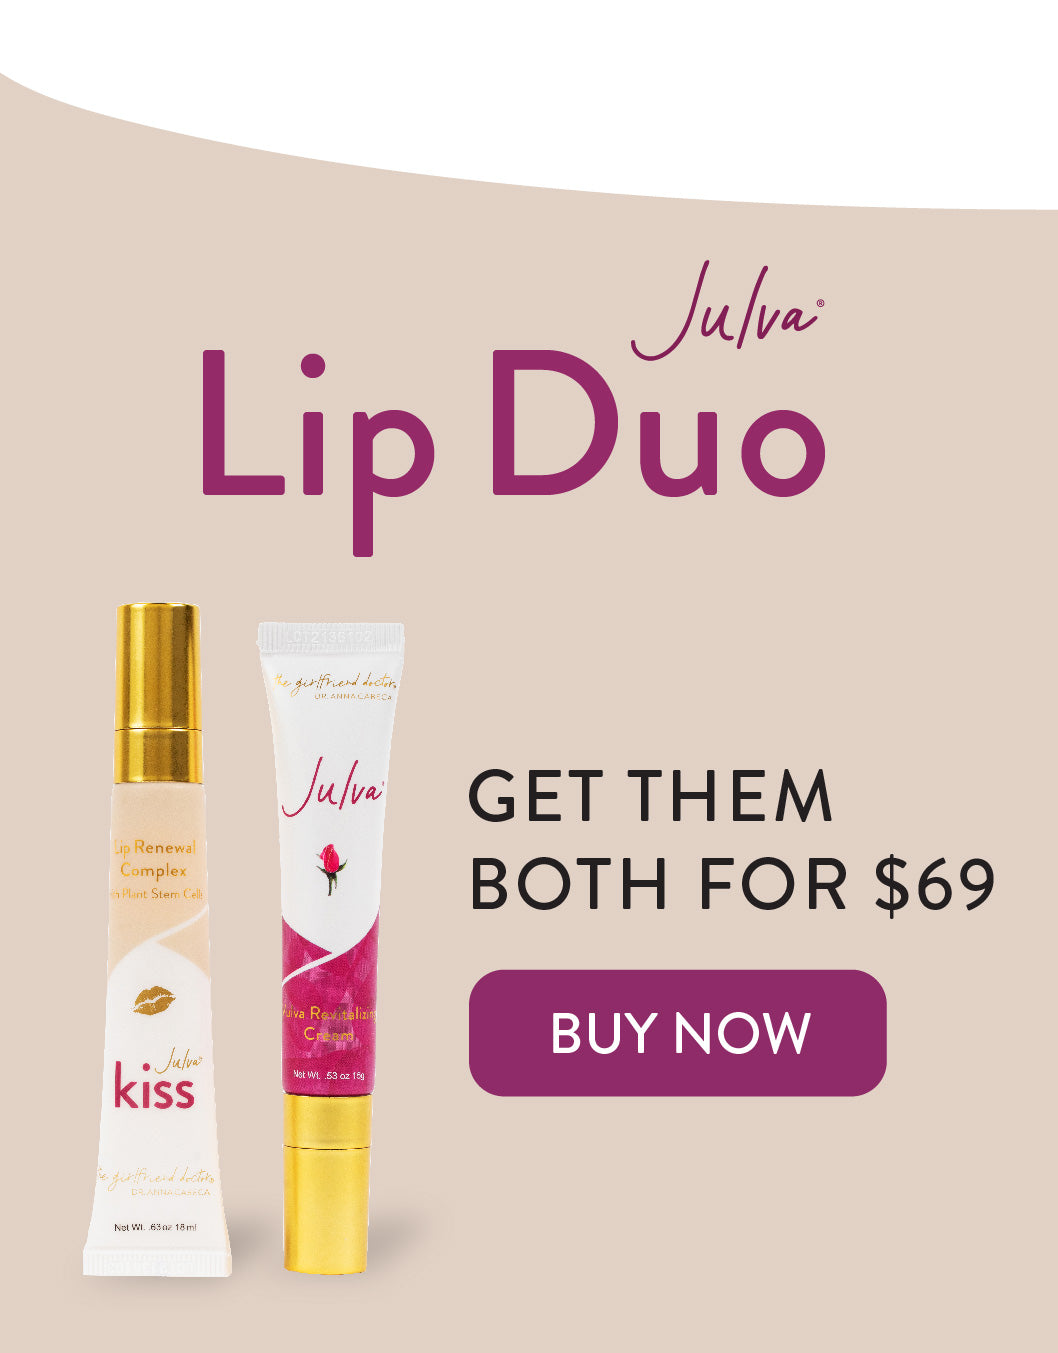 Julva Lip Duo. Get them both for  $69. Buy now.